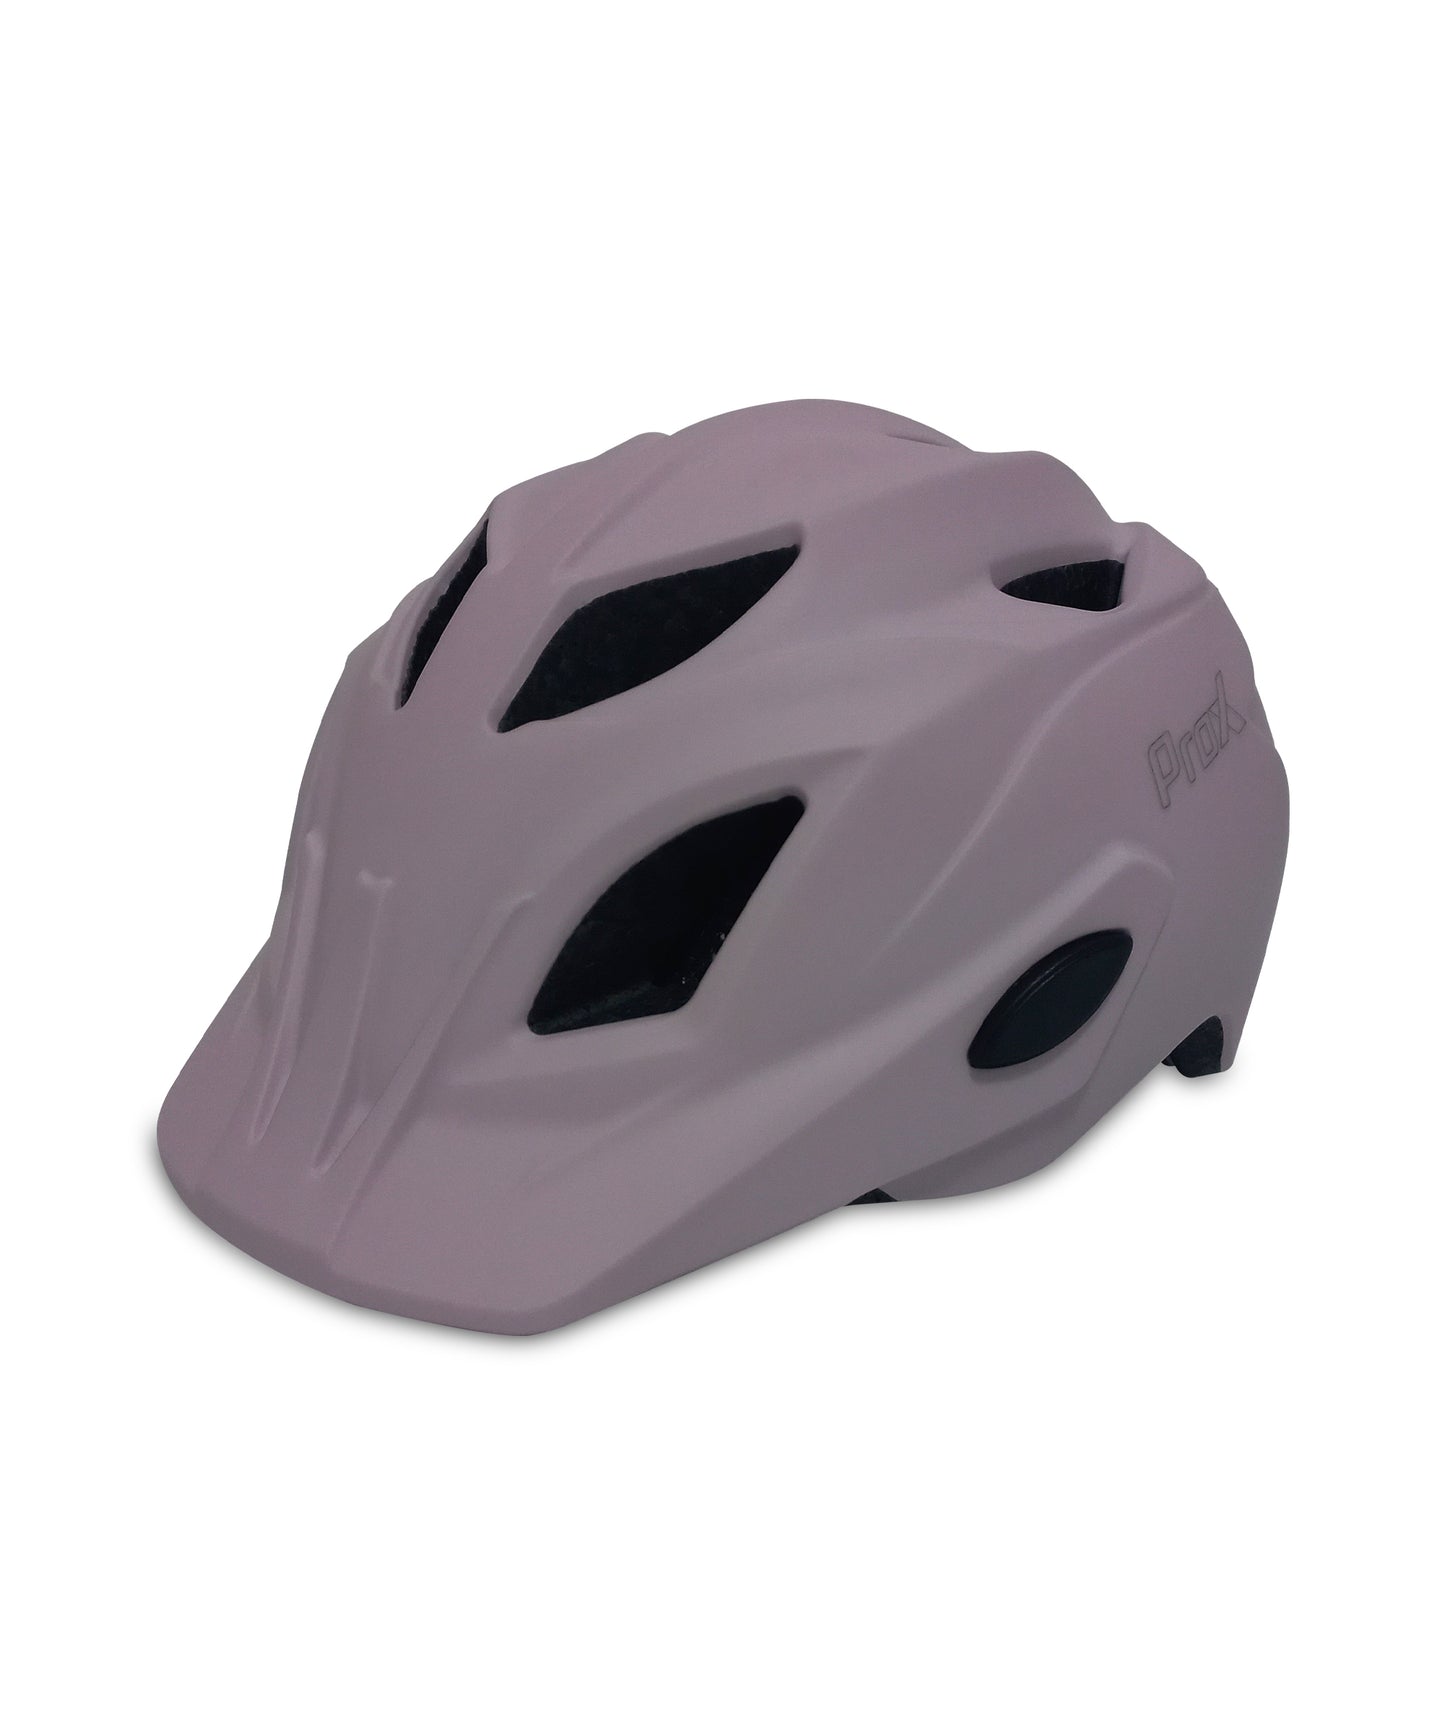 Children's bicycle helmet proX - White - Off-White